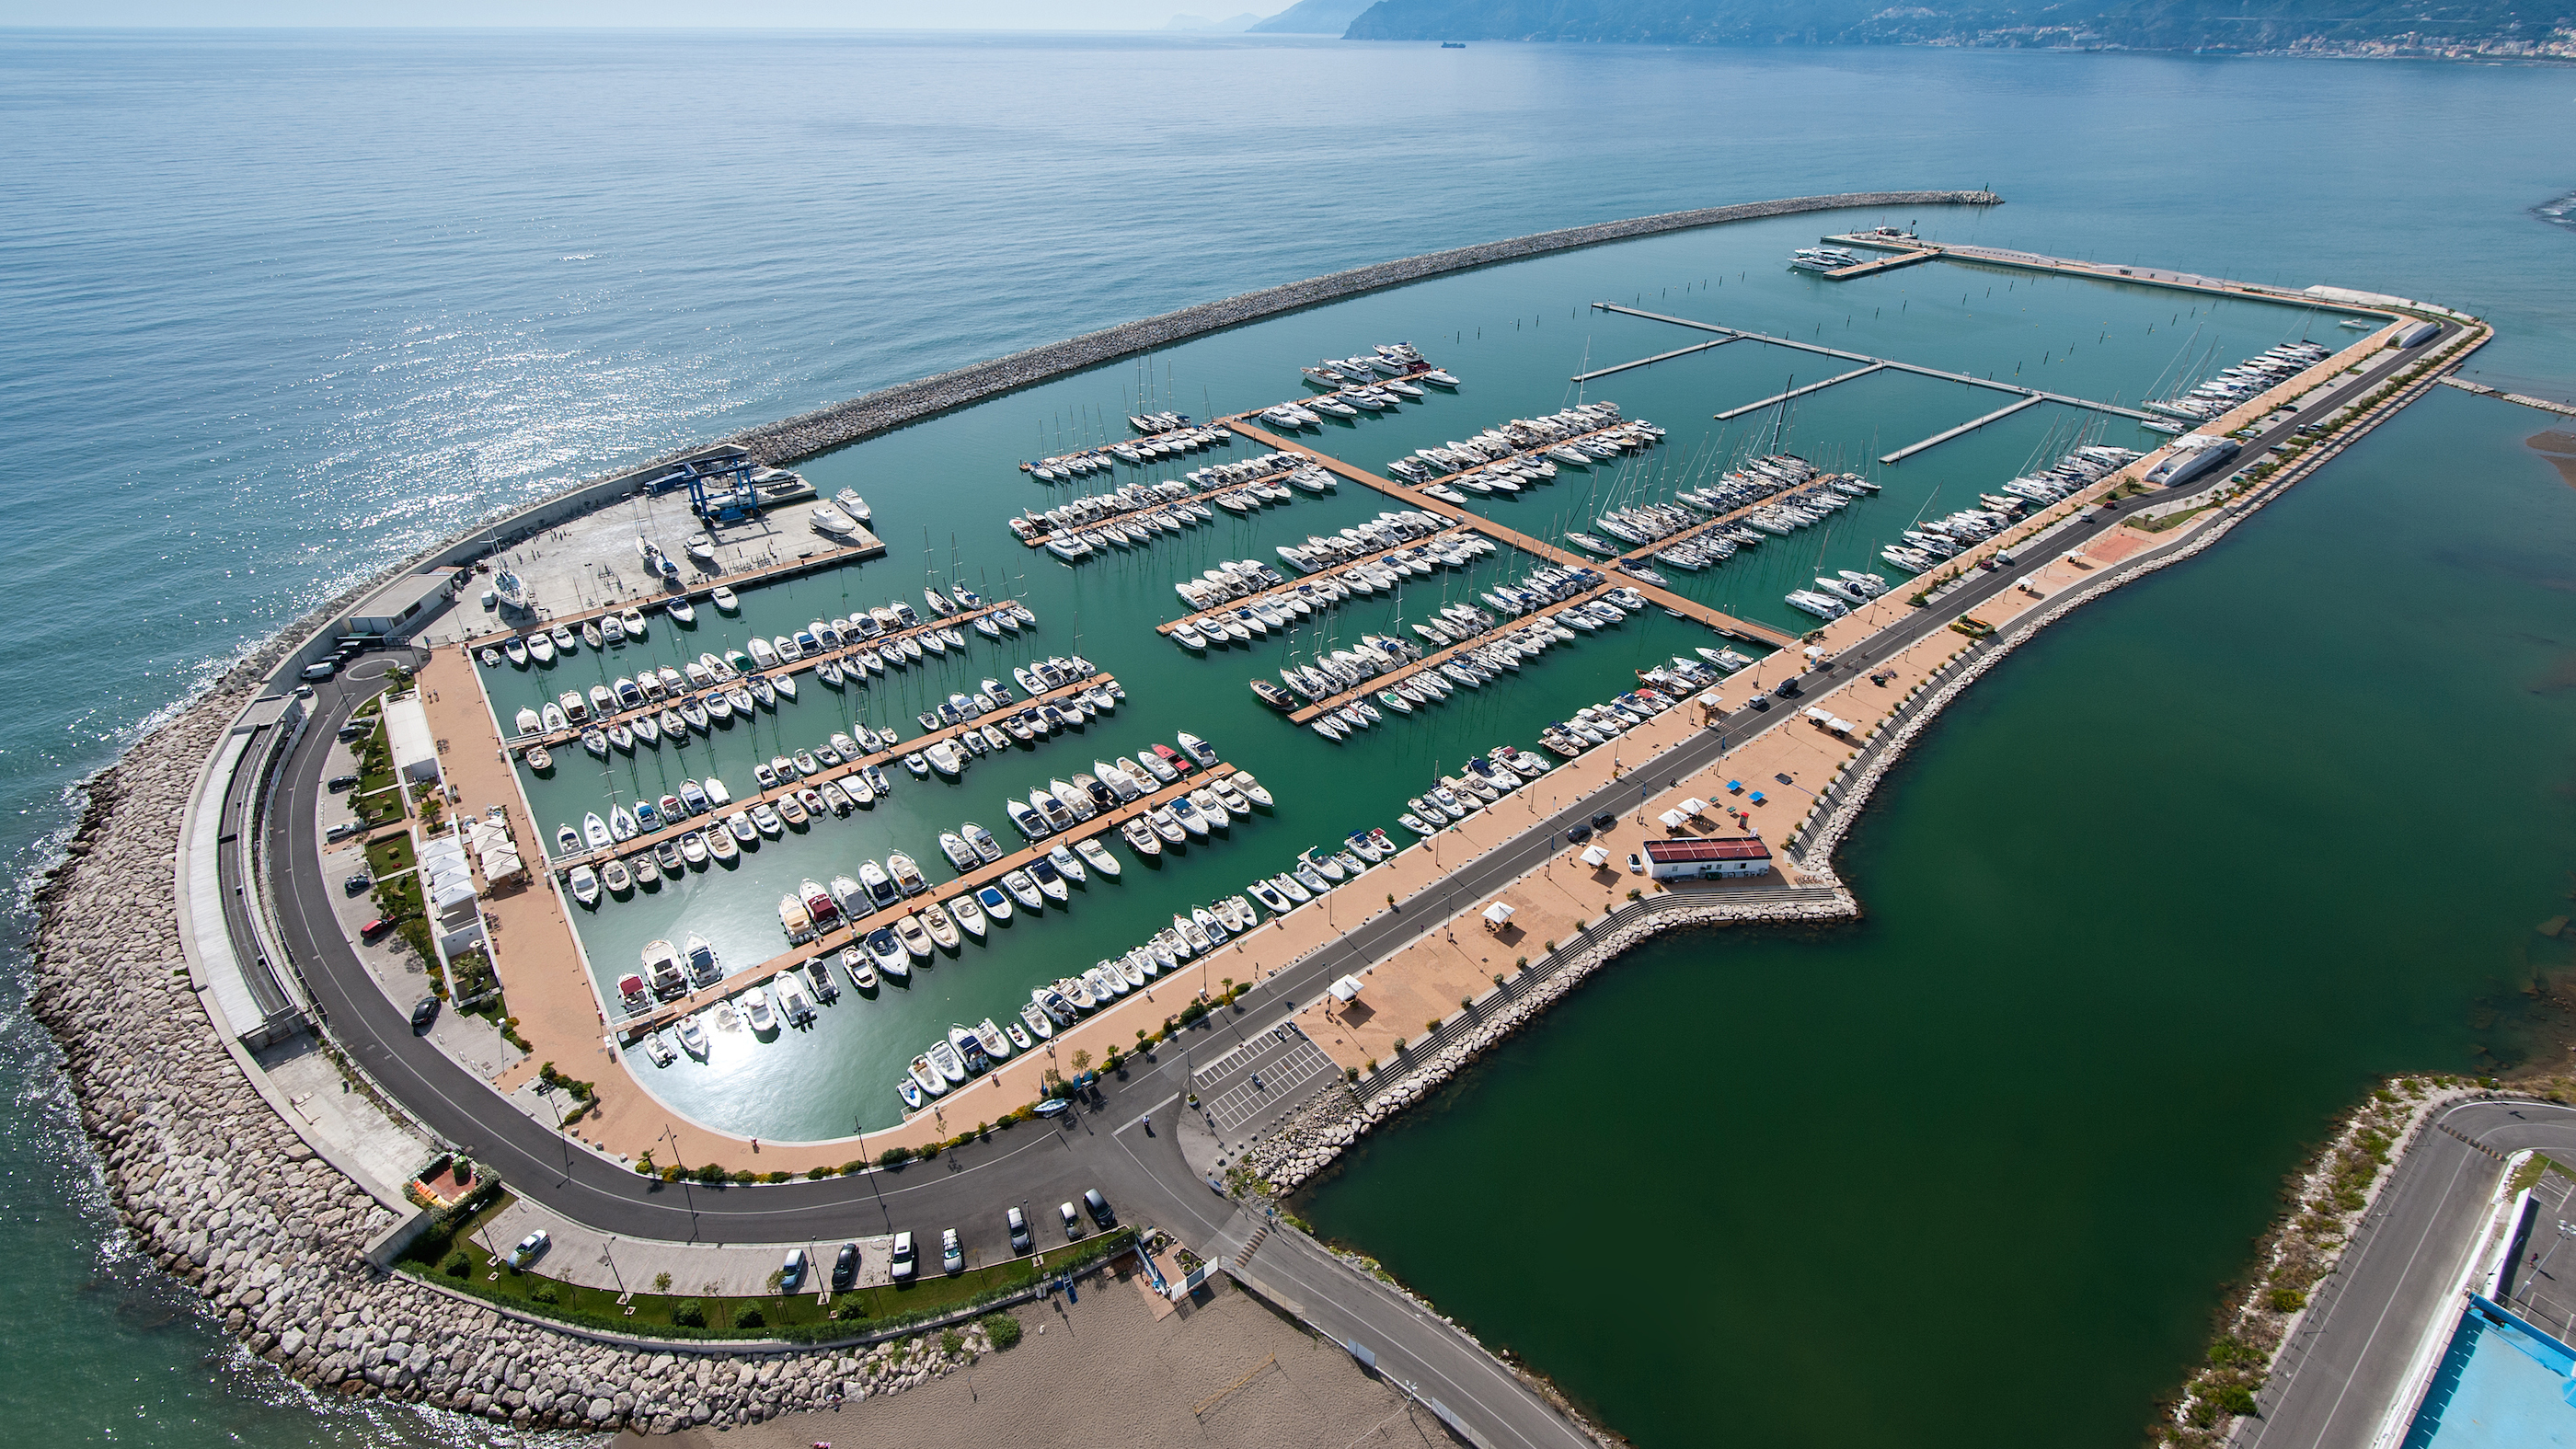 marina-darechi-amalfi-part-olaszorszag-1000-kikoto-hely-legnagyobb-luxusjacht-superyacht-hajozashu